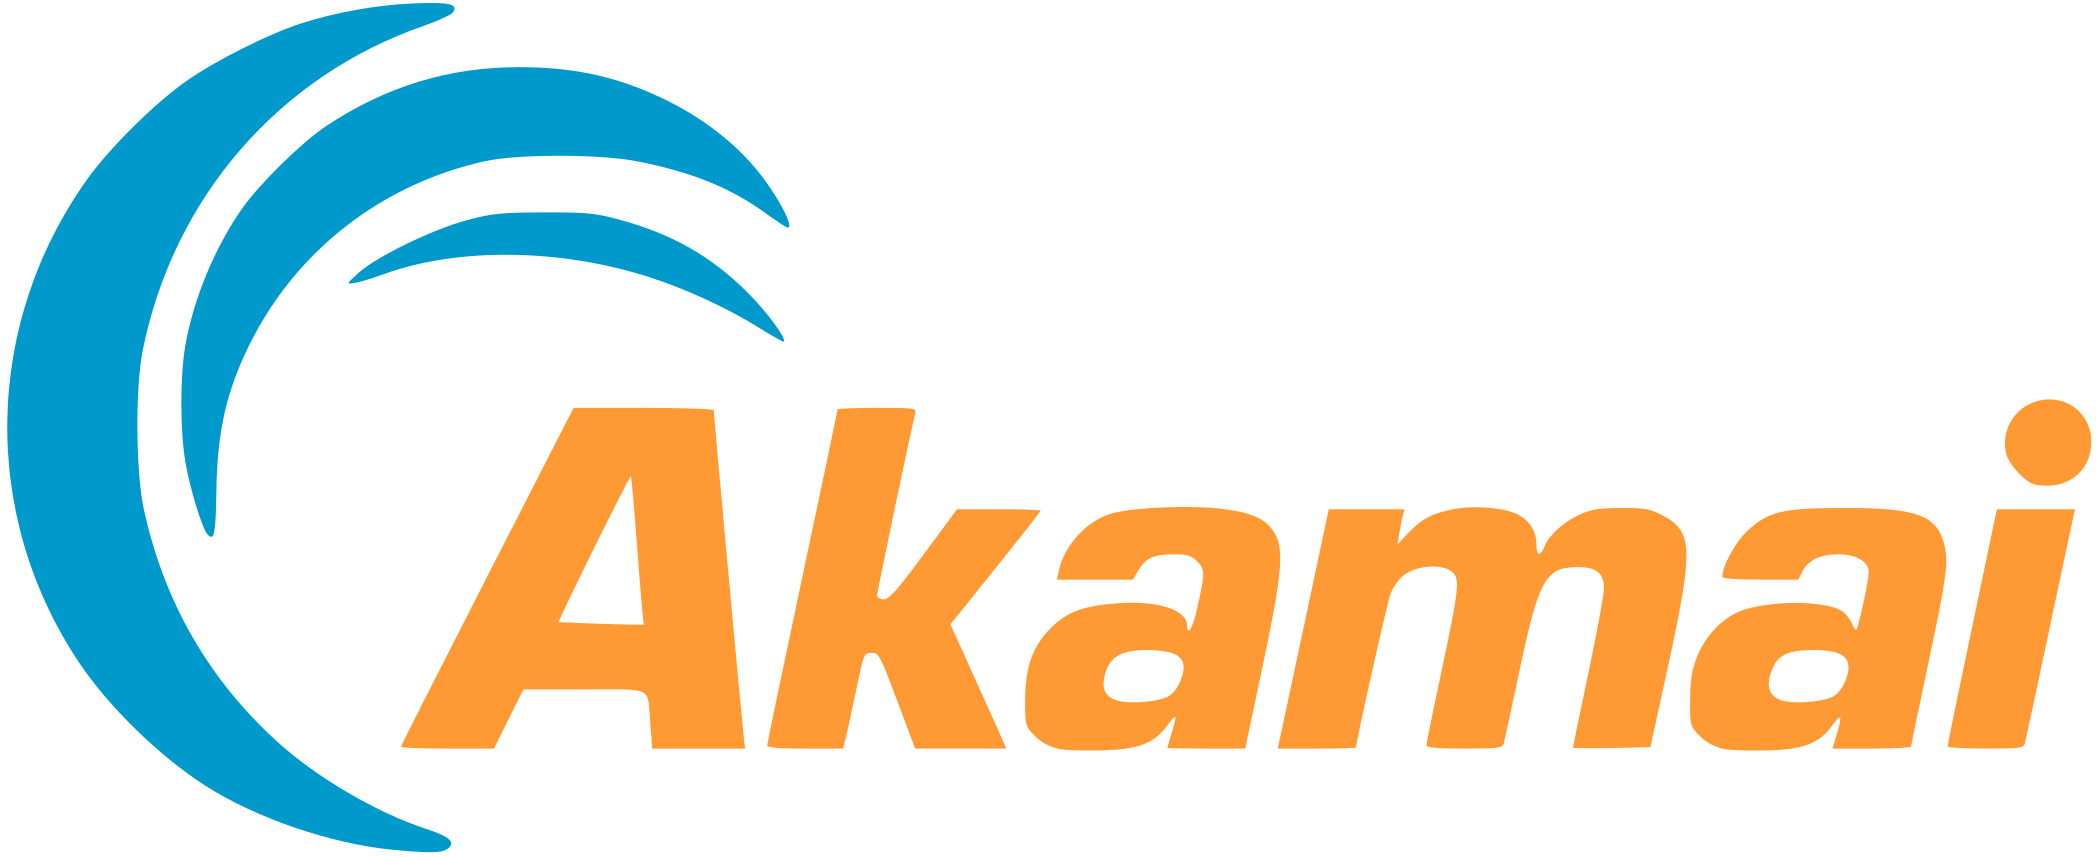 akamai-logo-1 - PNG - Download de Logotipos